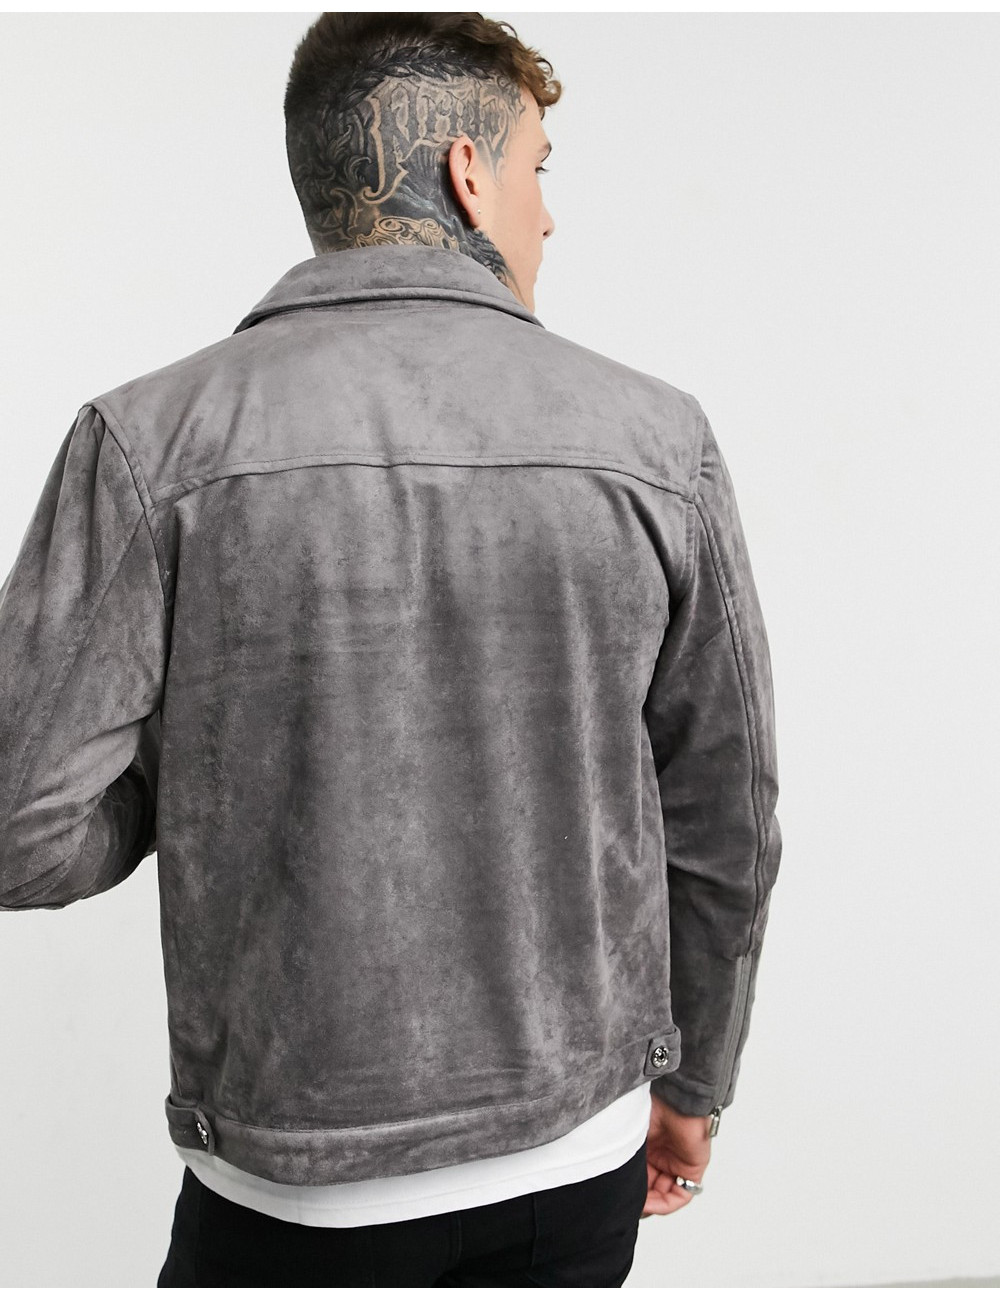 Azat Mard jacket in grey